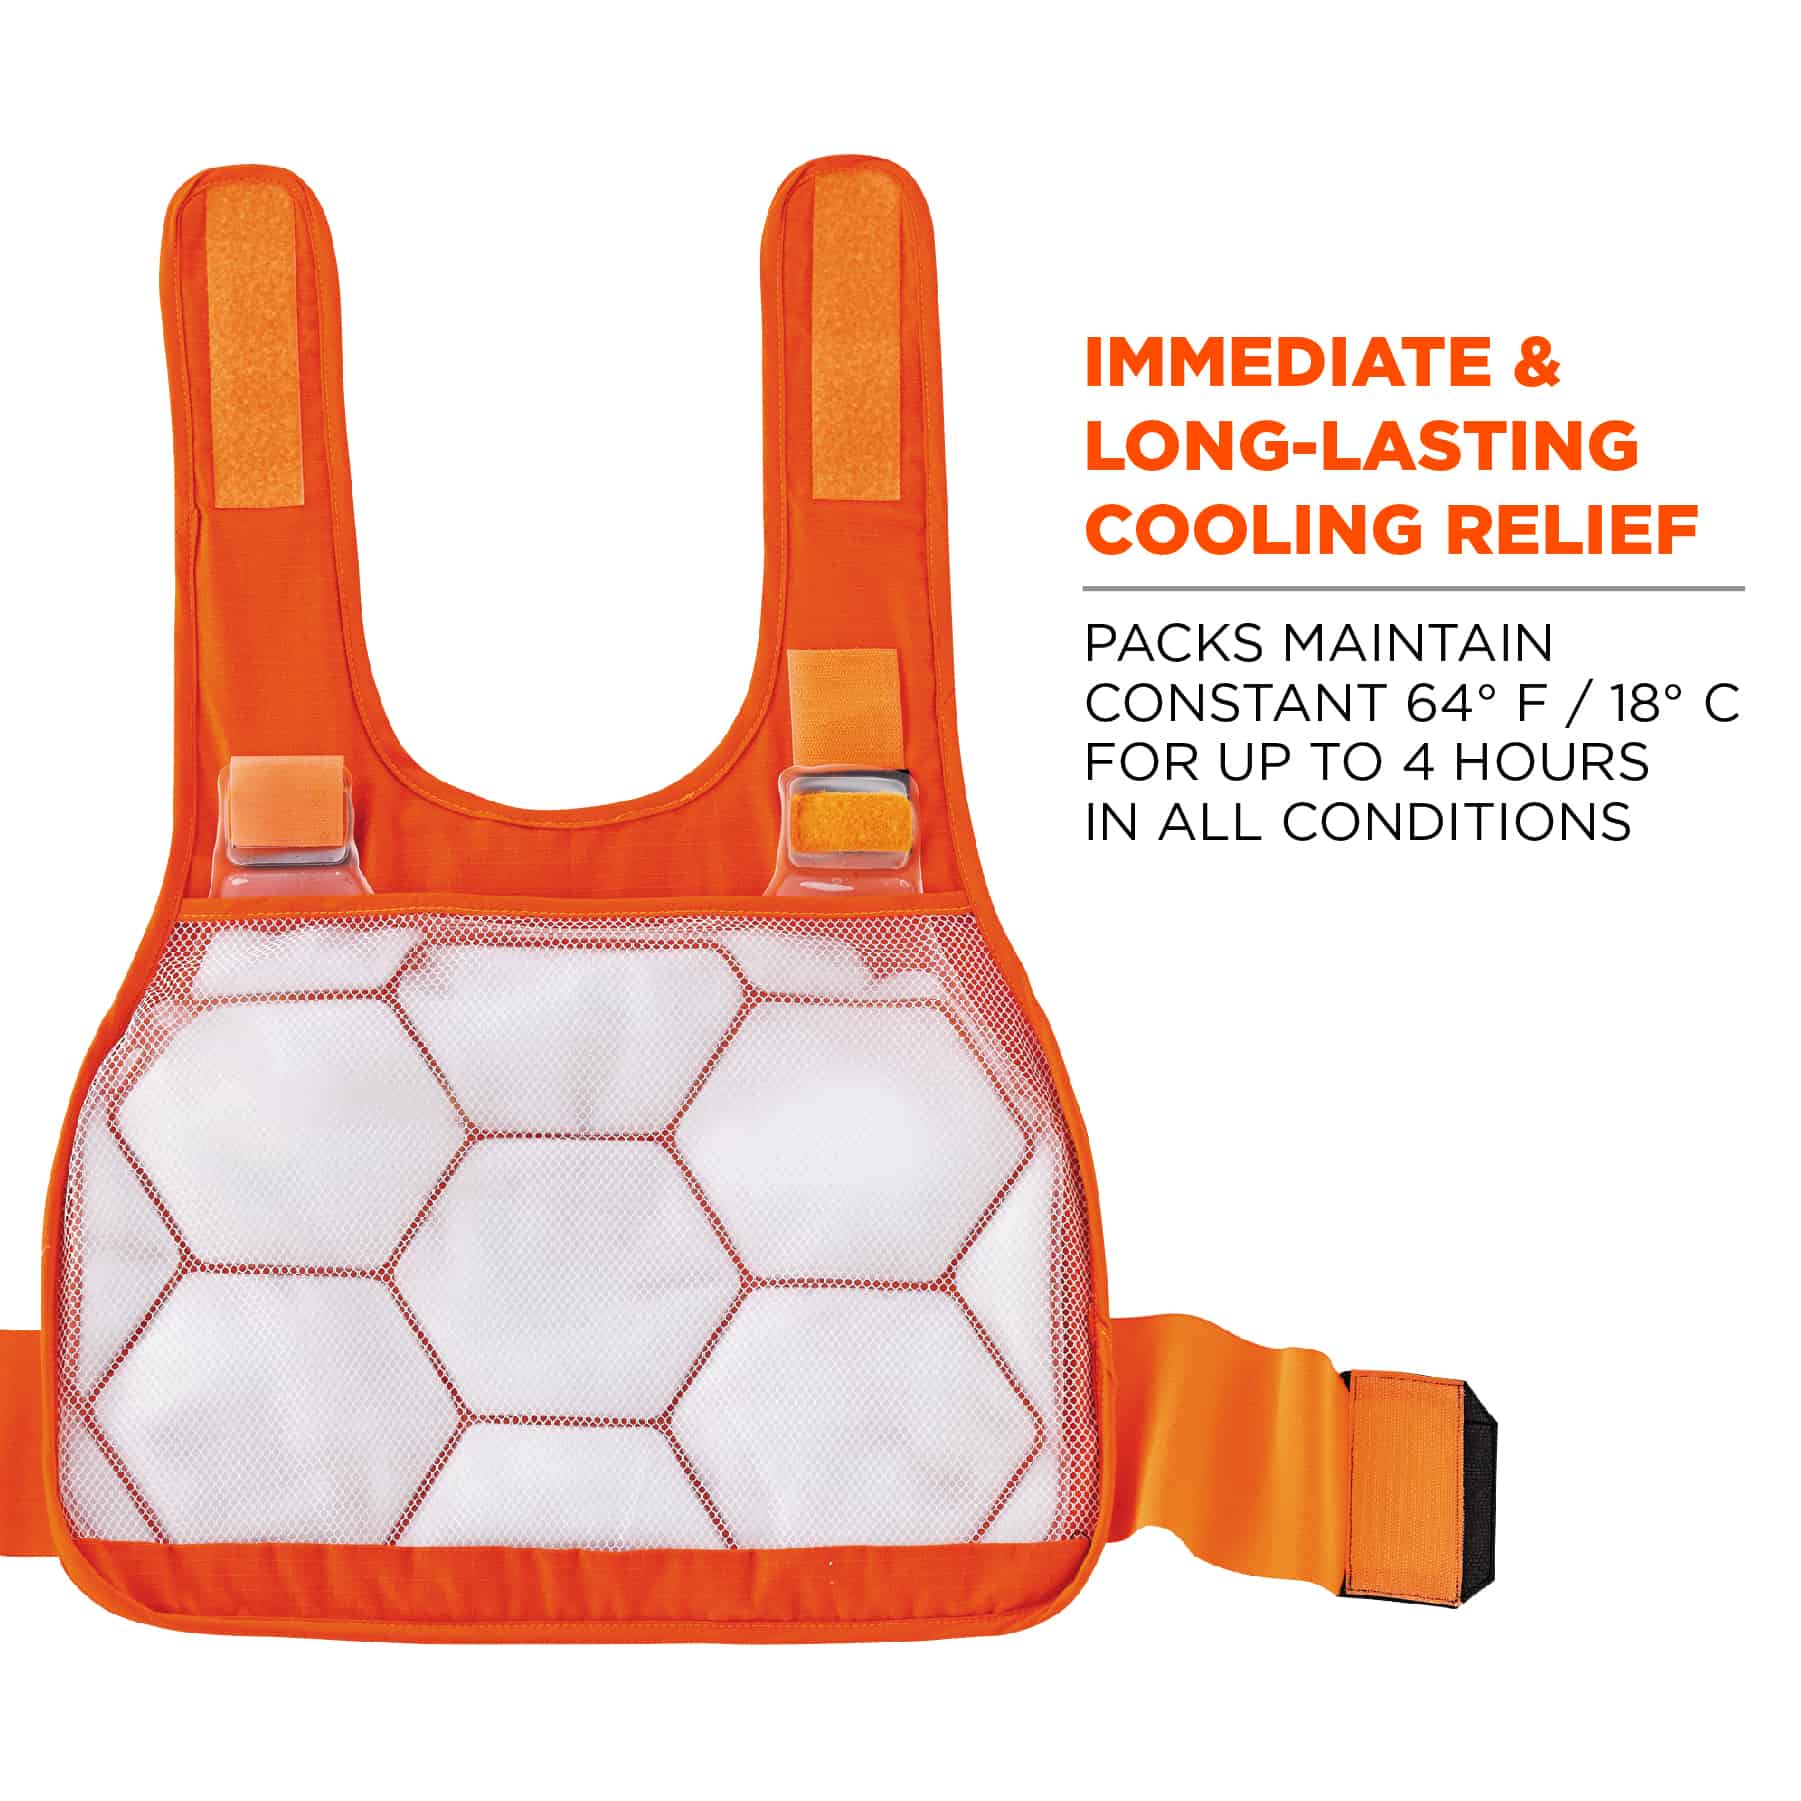 NEW! L/XL High Visibility ORANGE 5 to 10 hr Cooling Time Cooling Vest 